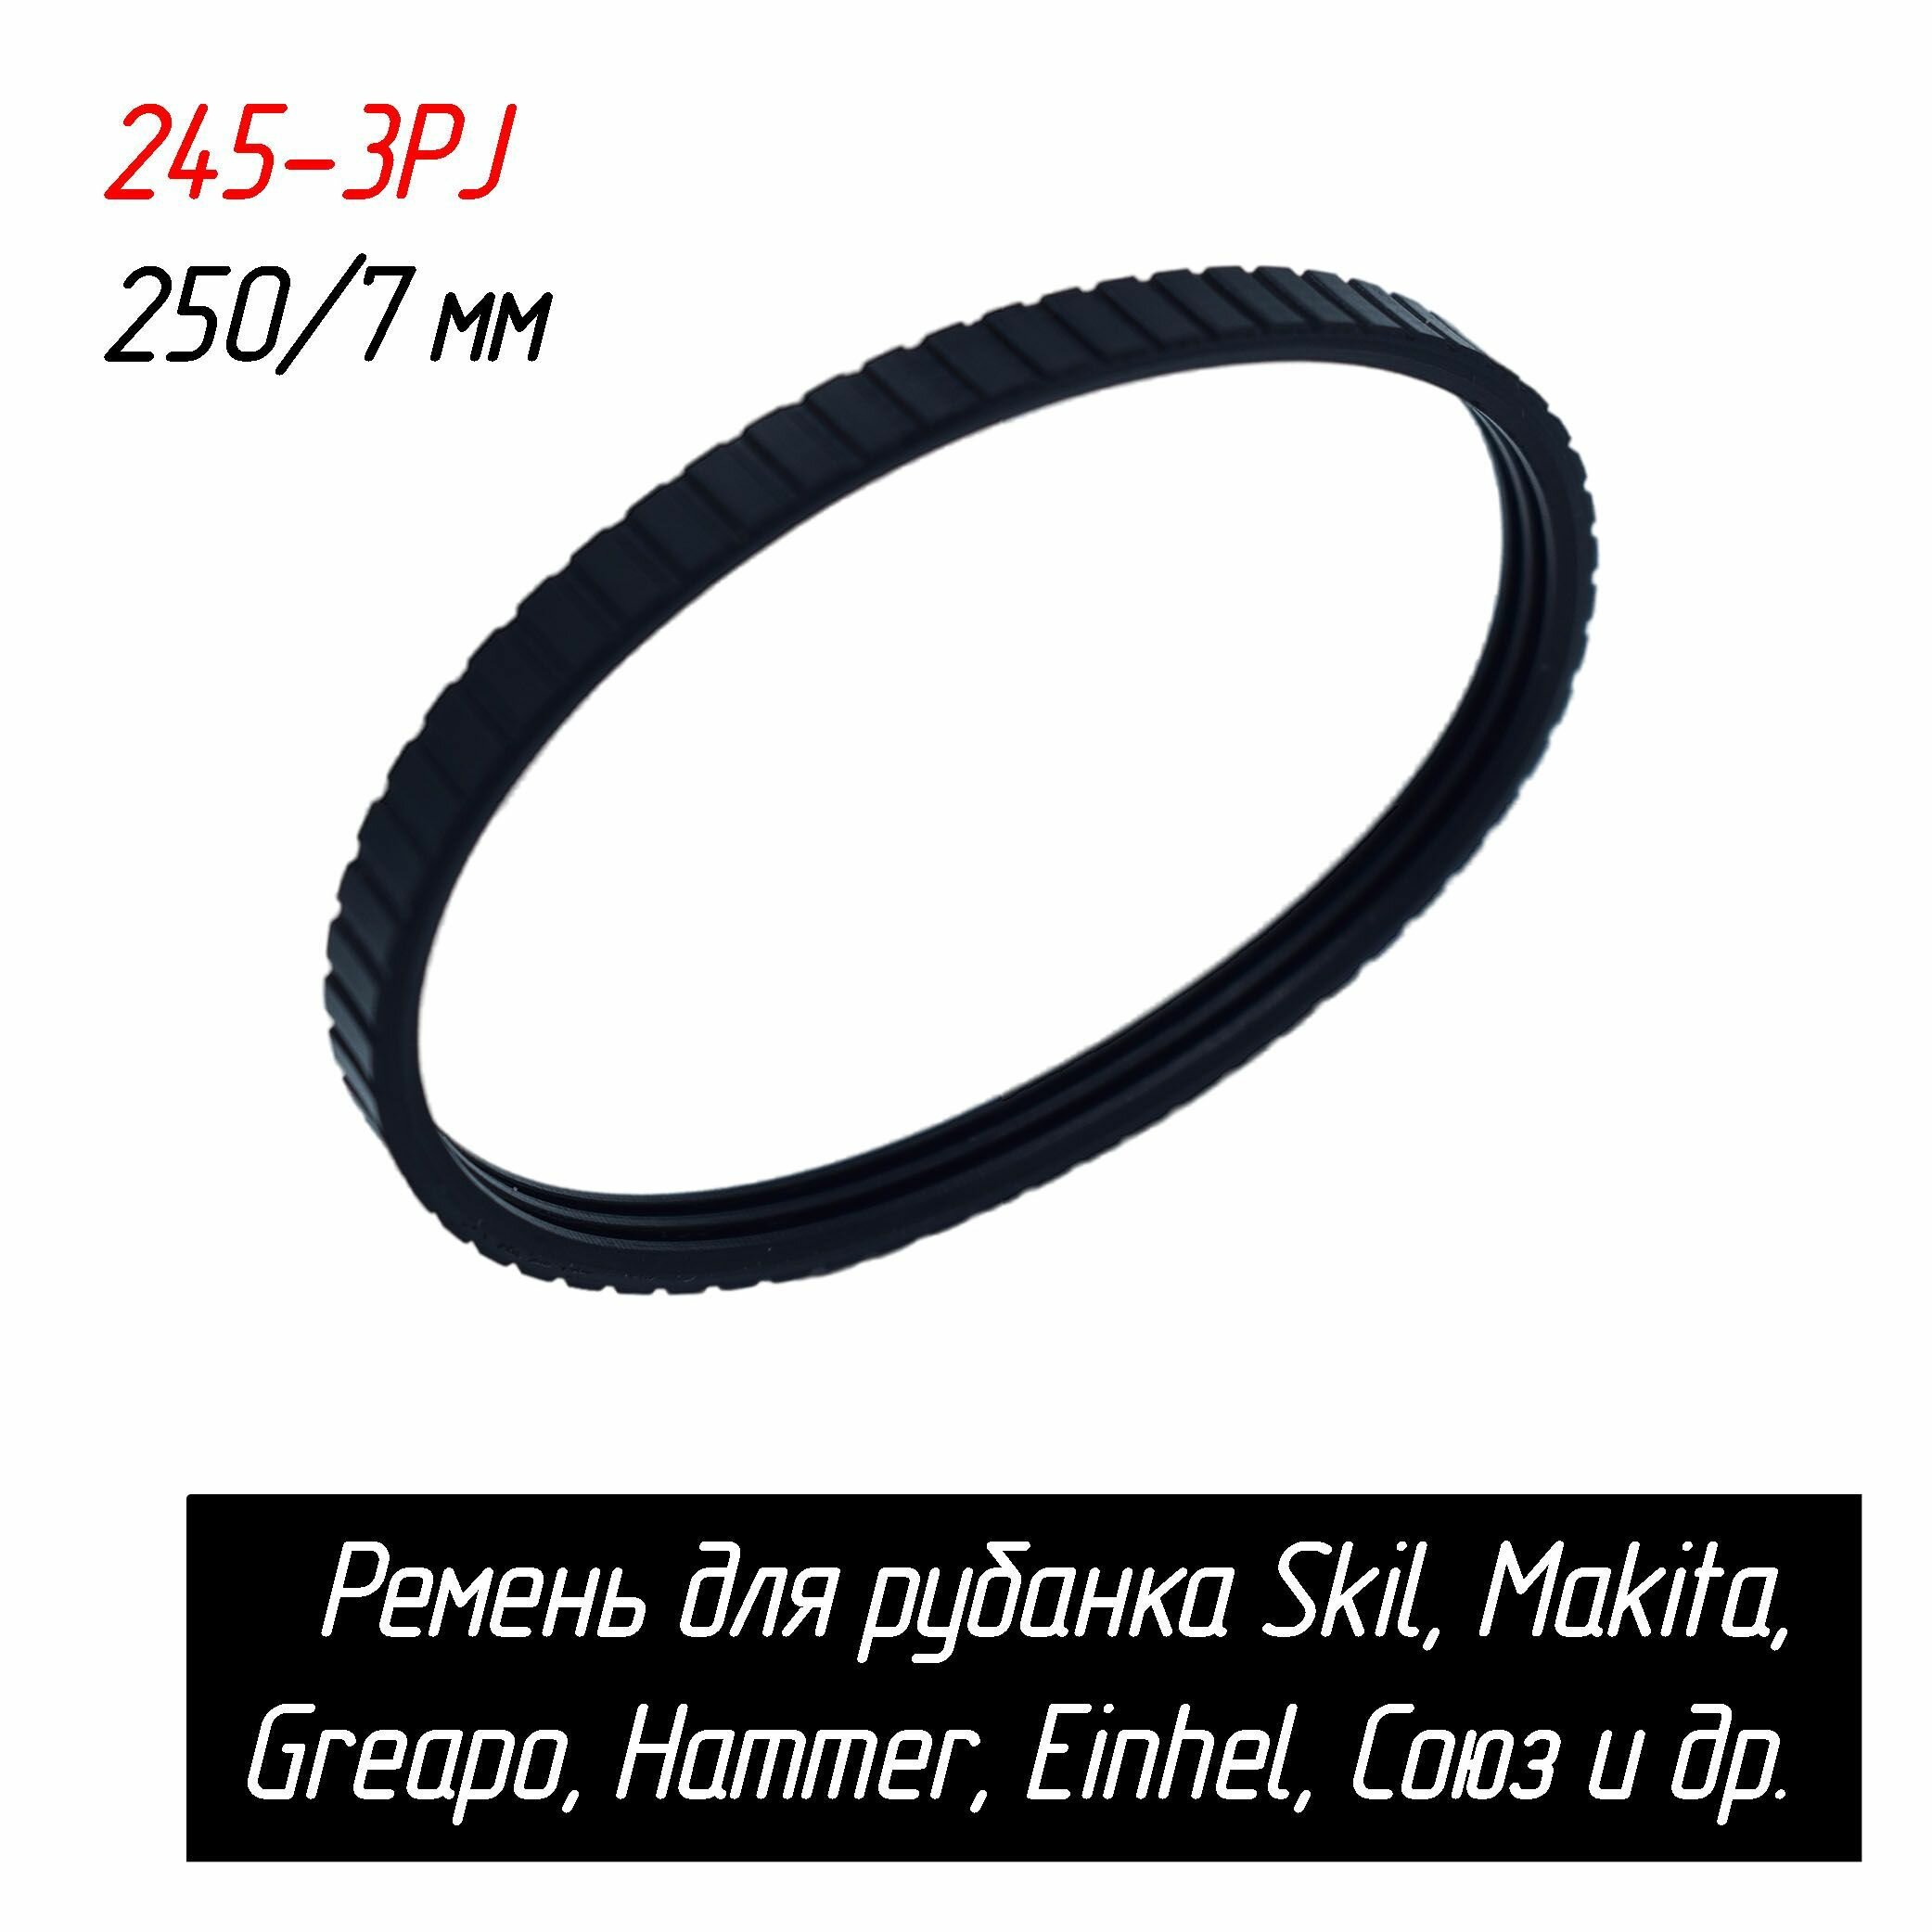 Ремень 245-3PJ (250/7 мм) для рубанка Skil 1555/1560, 9045, Greapo PPLH 822H Hammer RNK-600 Einhel, Союз (2610394629 AEZ)